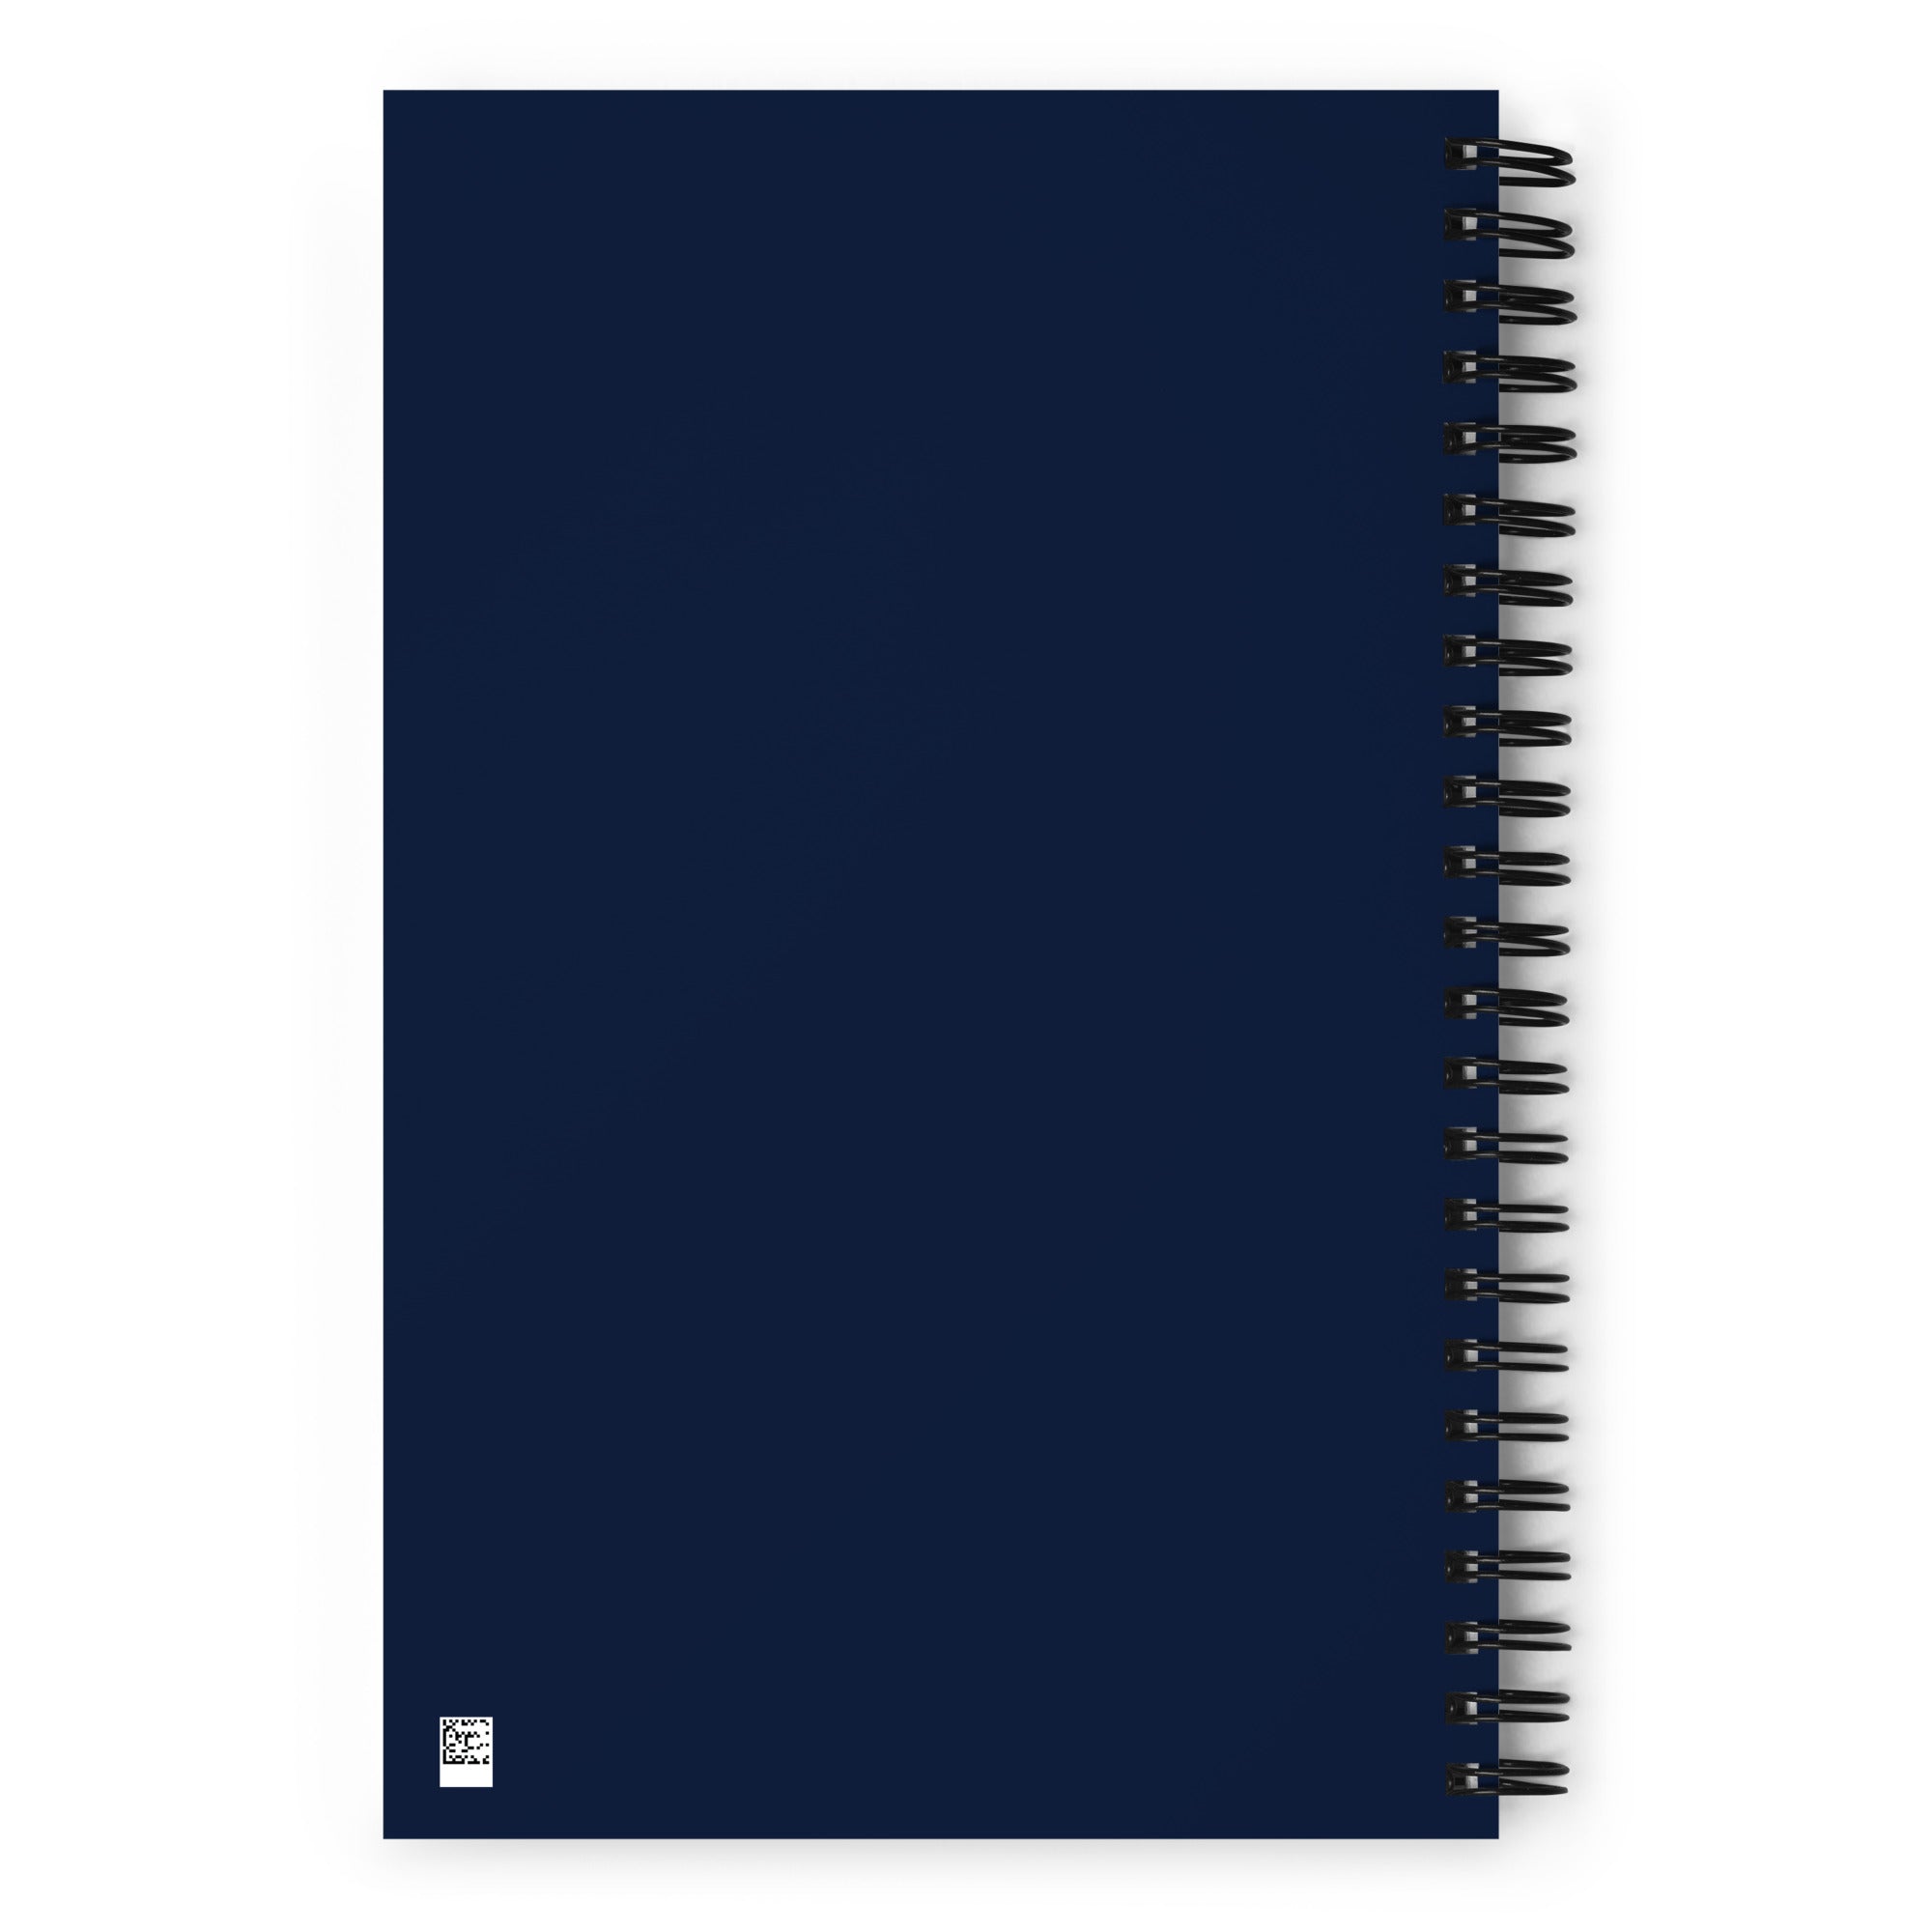 SLCS Spiral notebook